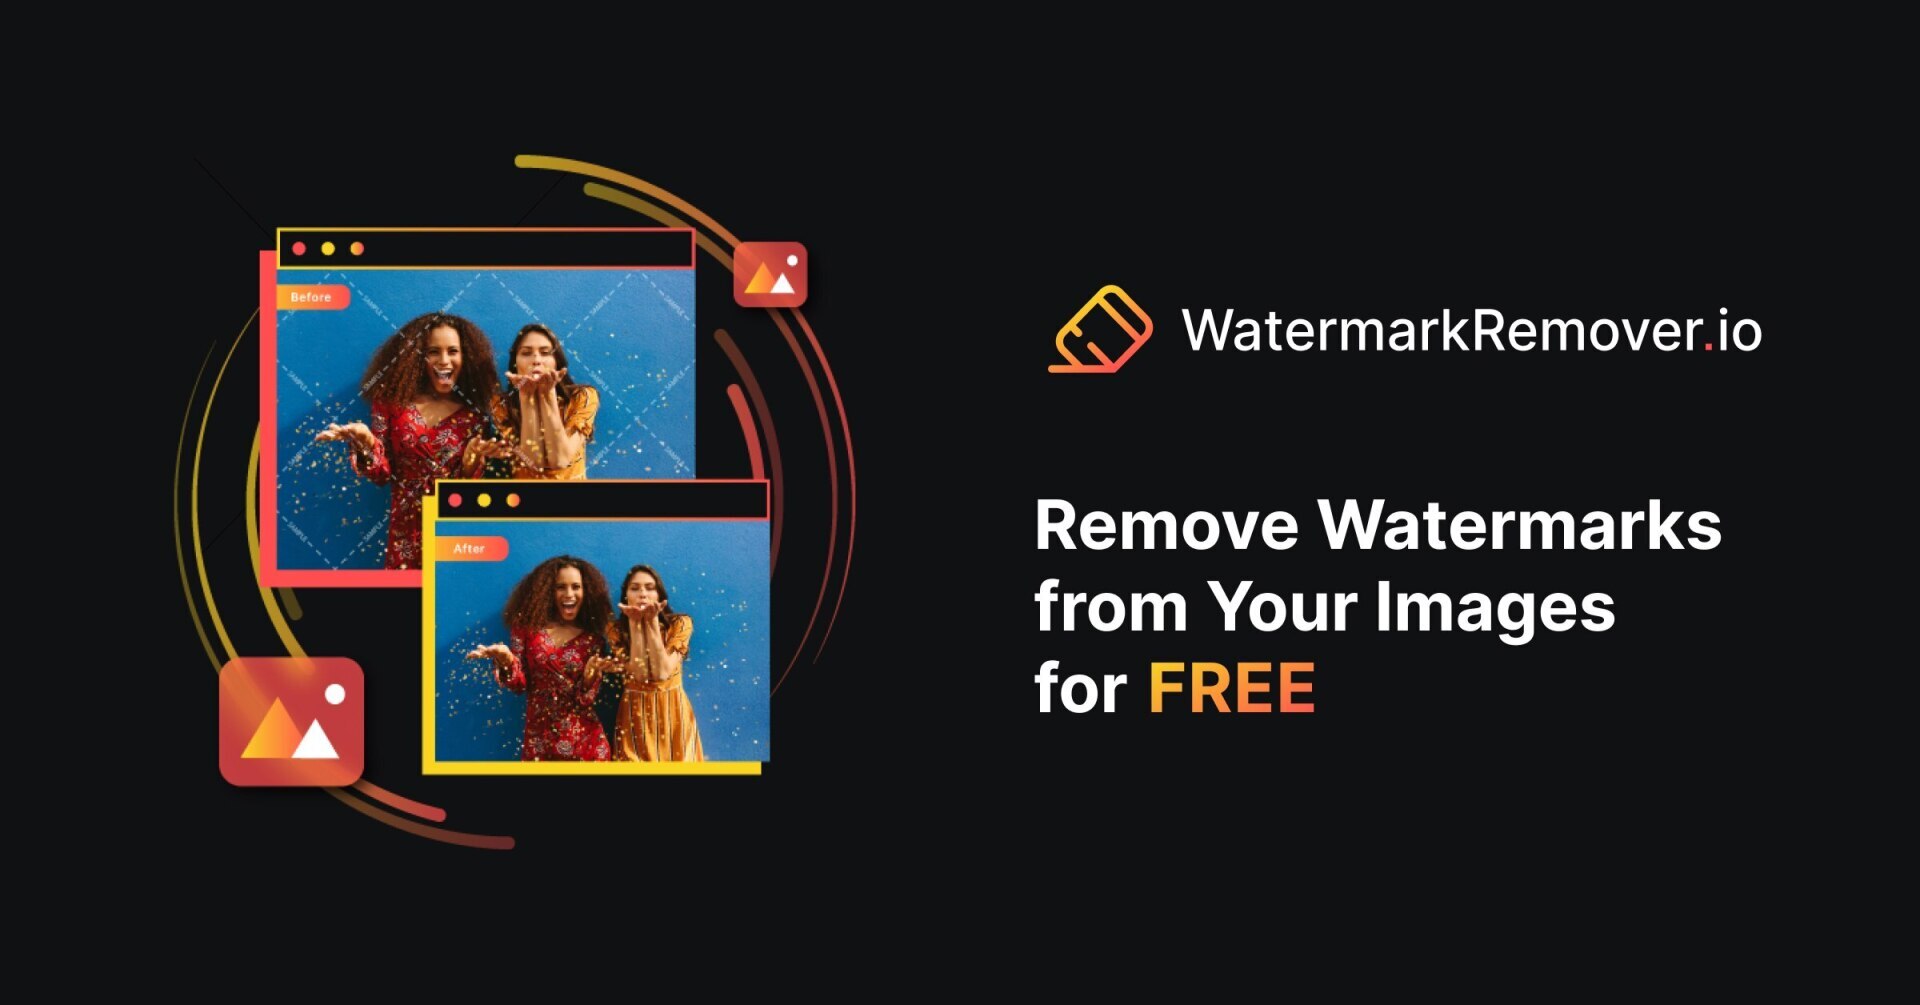 Watermark Remover.io